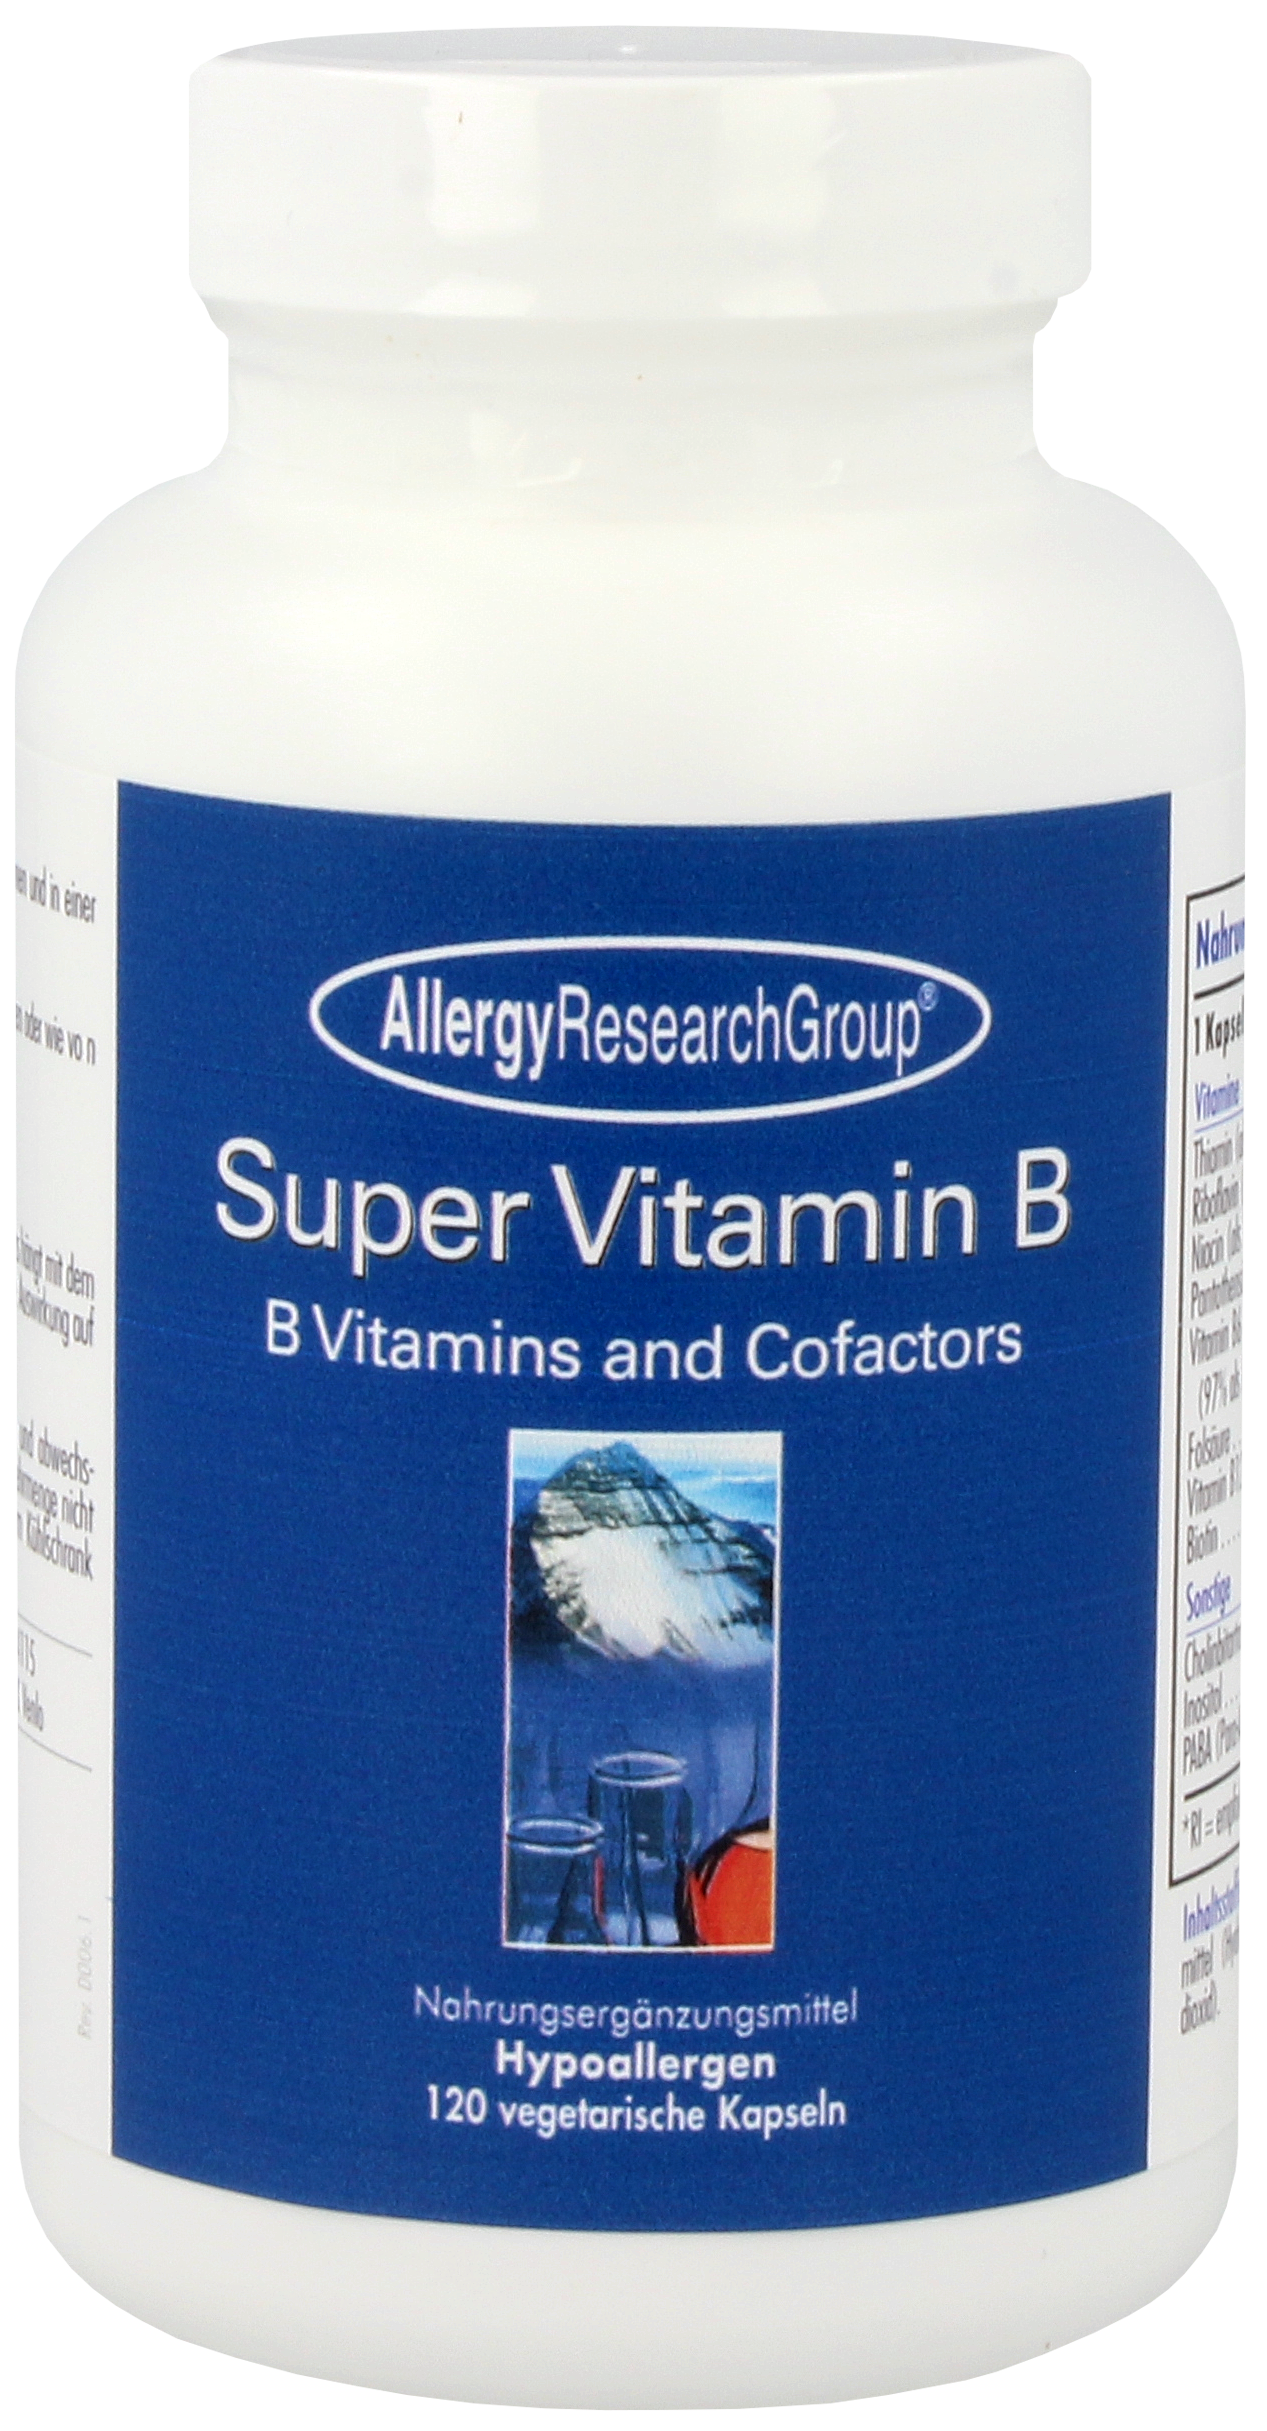 Super Vitamin B Complex 